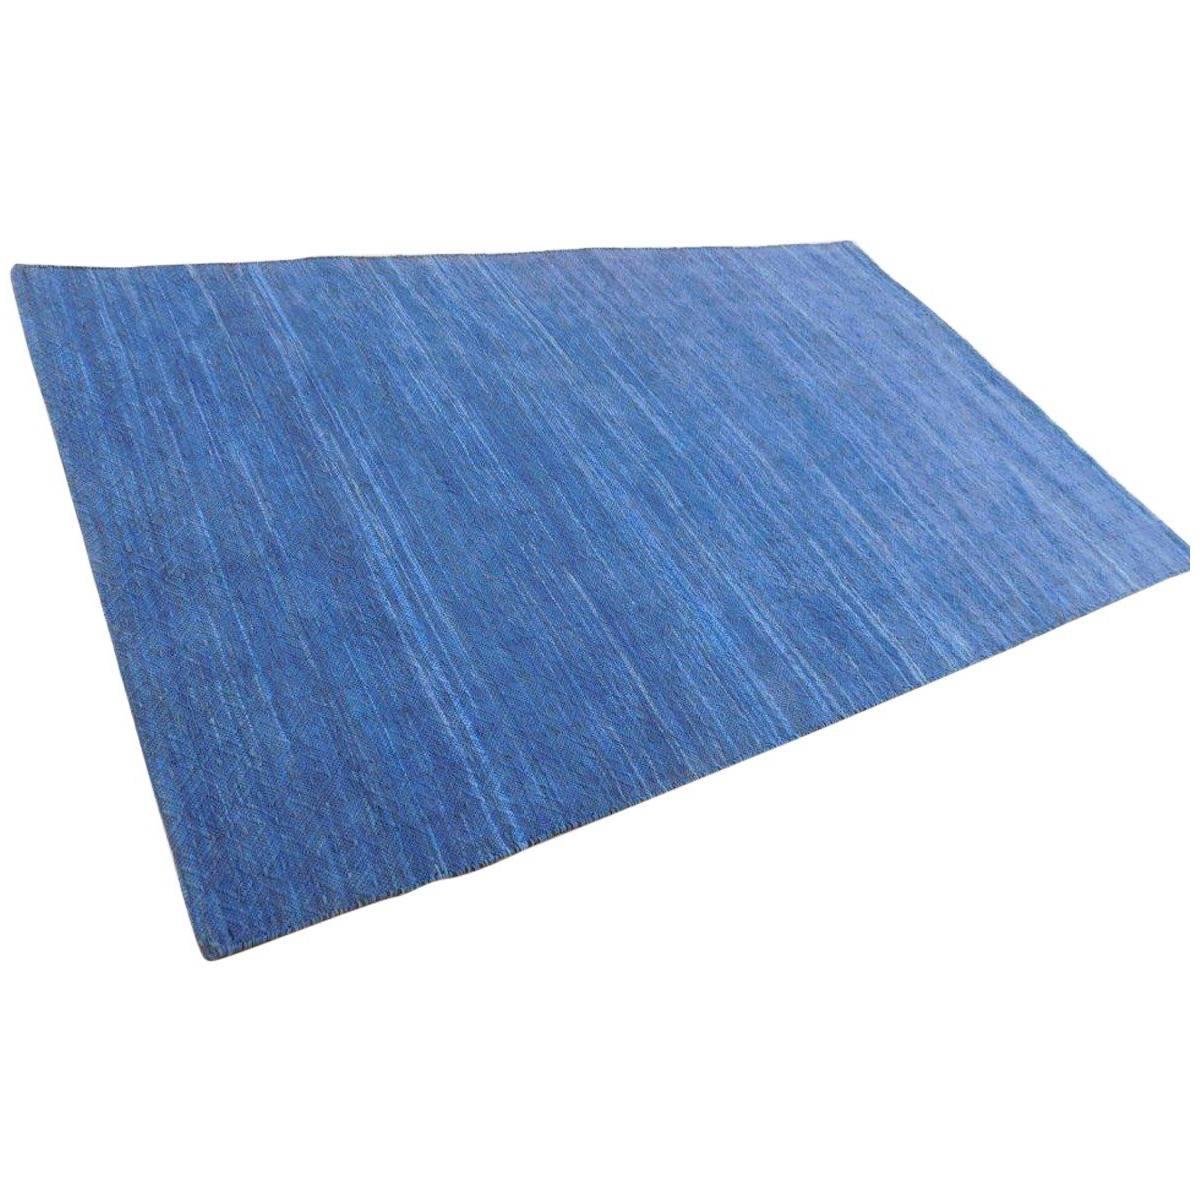 Indigo Denim Blue Suede Contemporary Flat-Weave Woven Rug in Stock